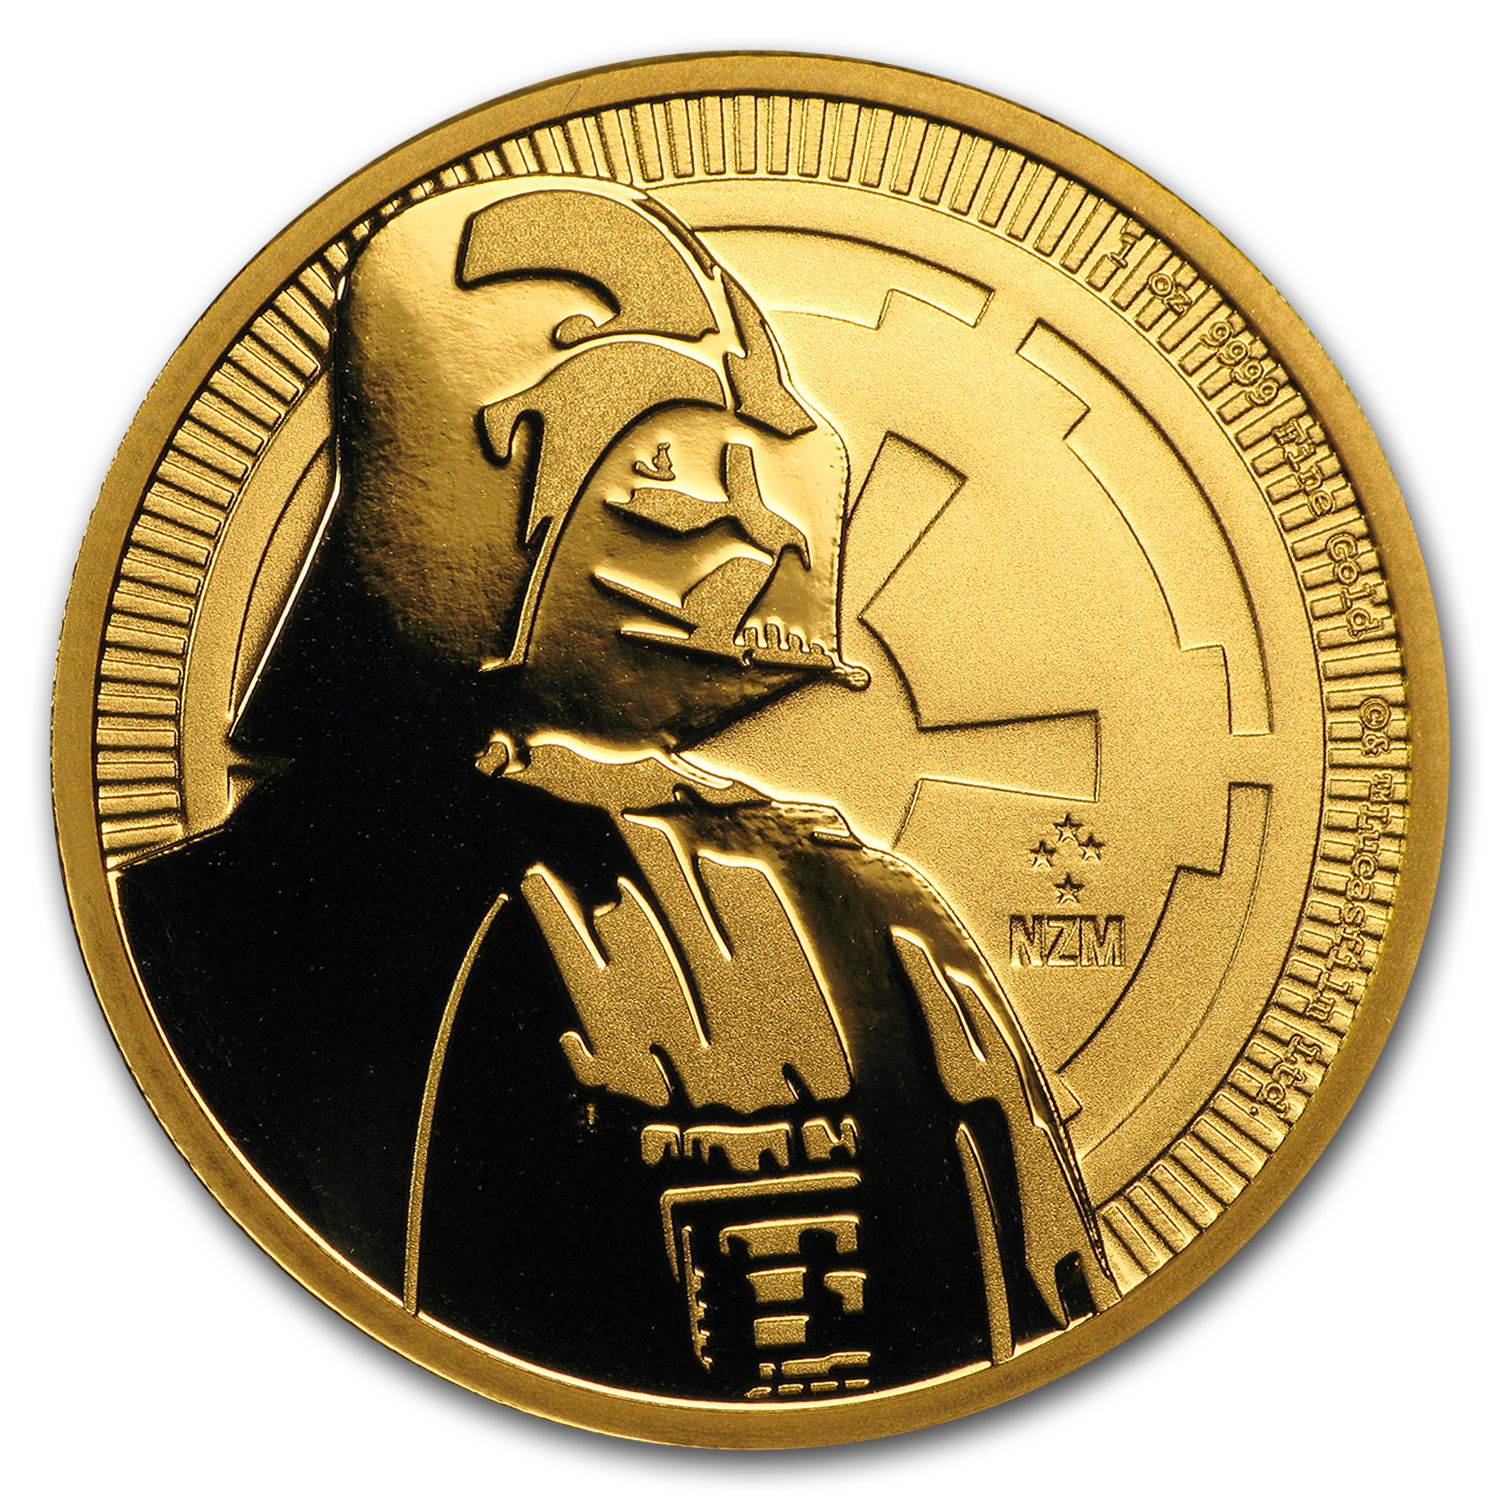 2017 Niue 1 oz Gold $250 Star Wars: Darth Vader BU - SKU #151025